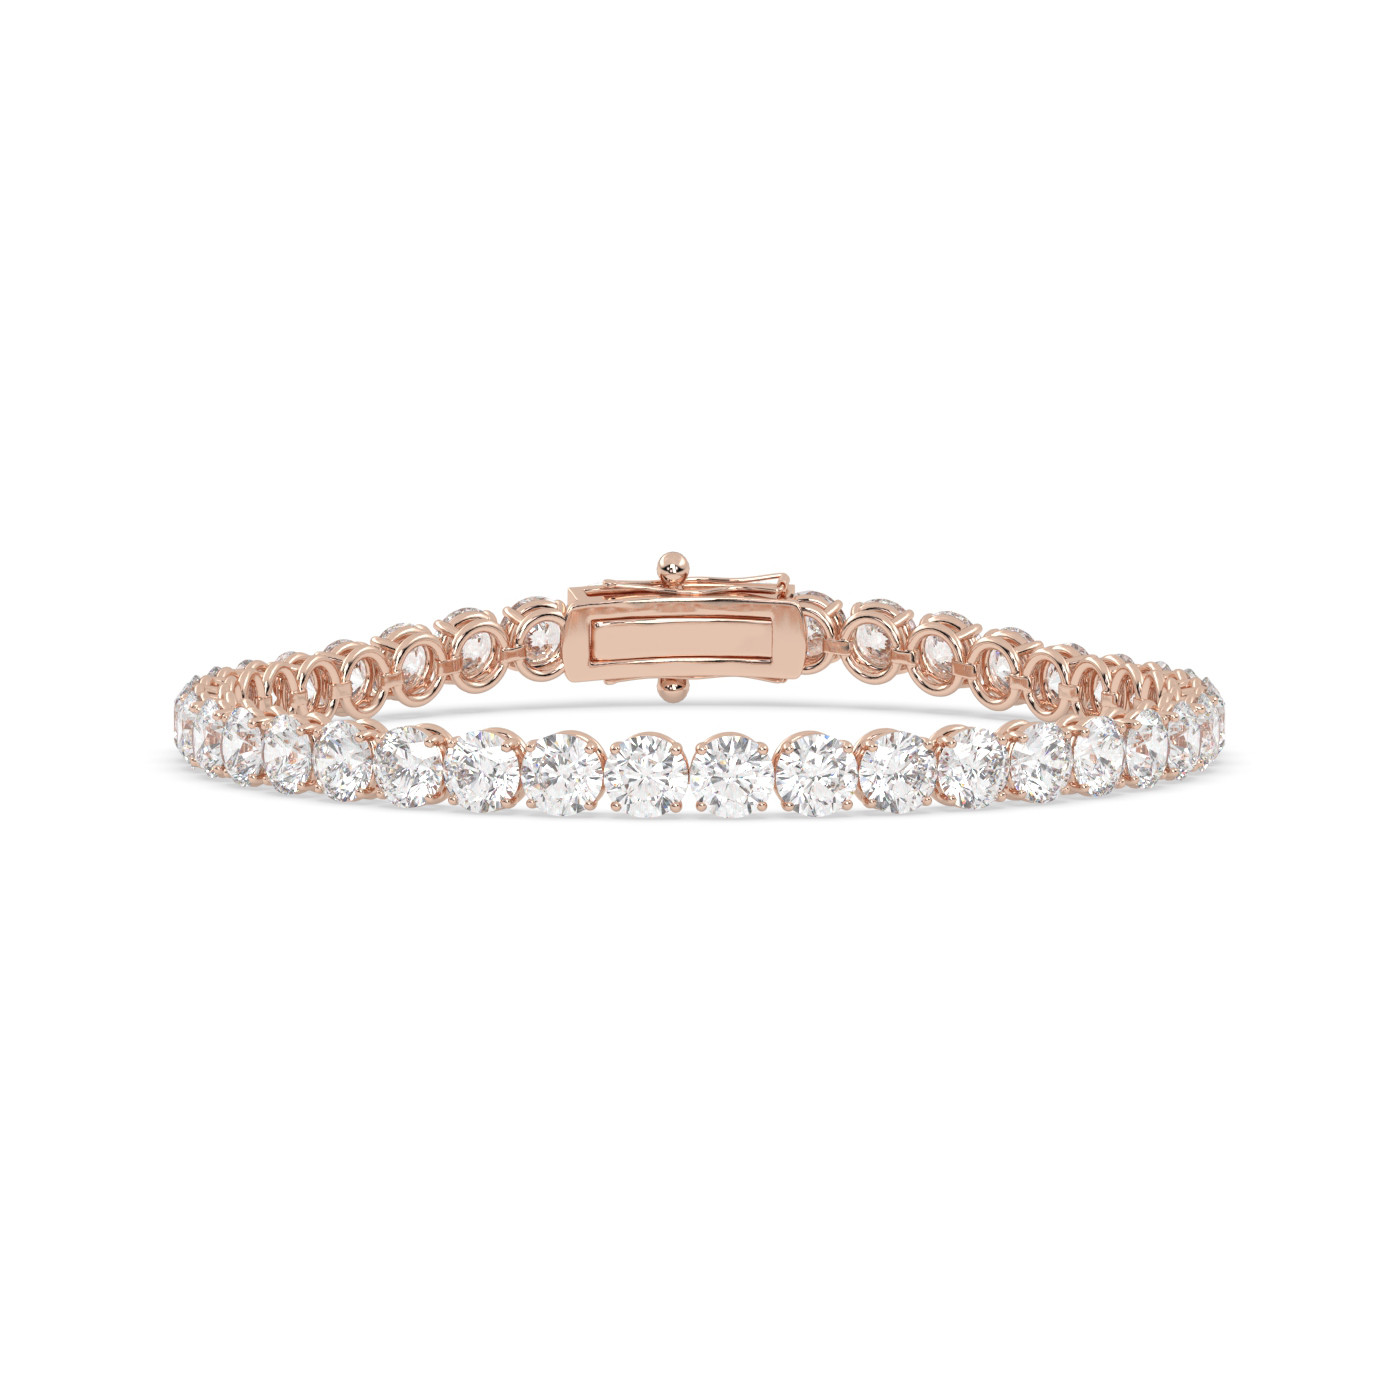 18k rose gold 17 carat round diamond tennis bracelet with traditional lock sytem Photos & images